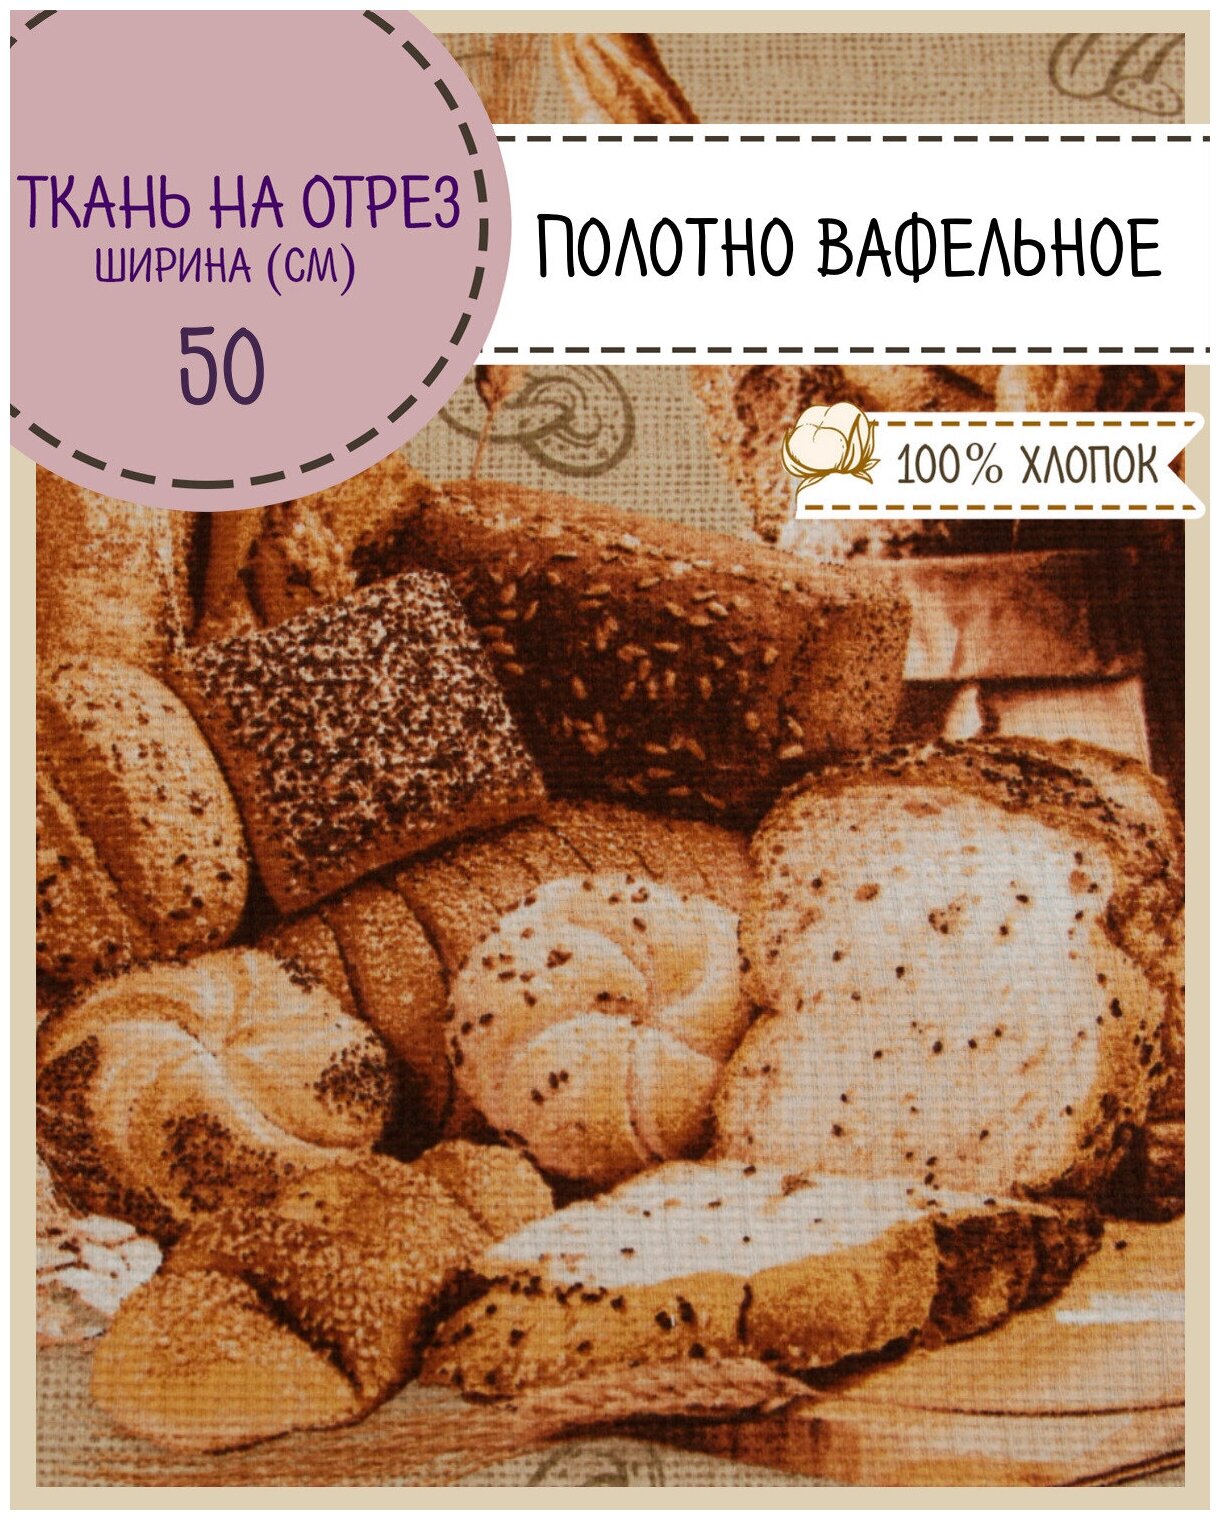 Ткань Полотно вафельное "Хлеб", 100% хлопок, ш-50 см, на отрез, цена за 2,2 пог. метра